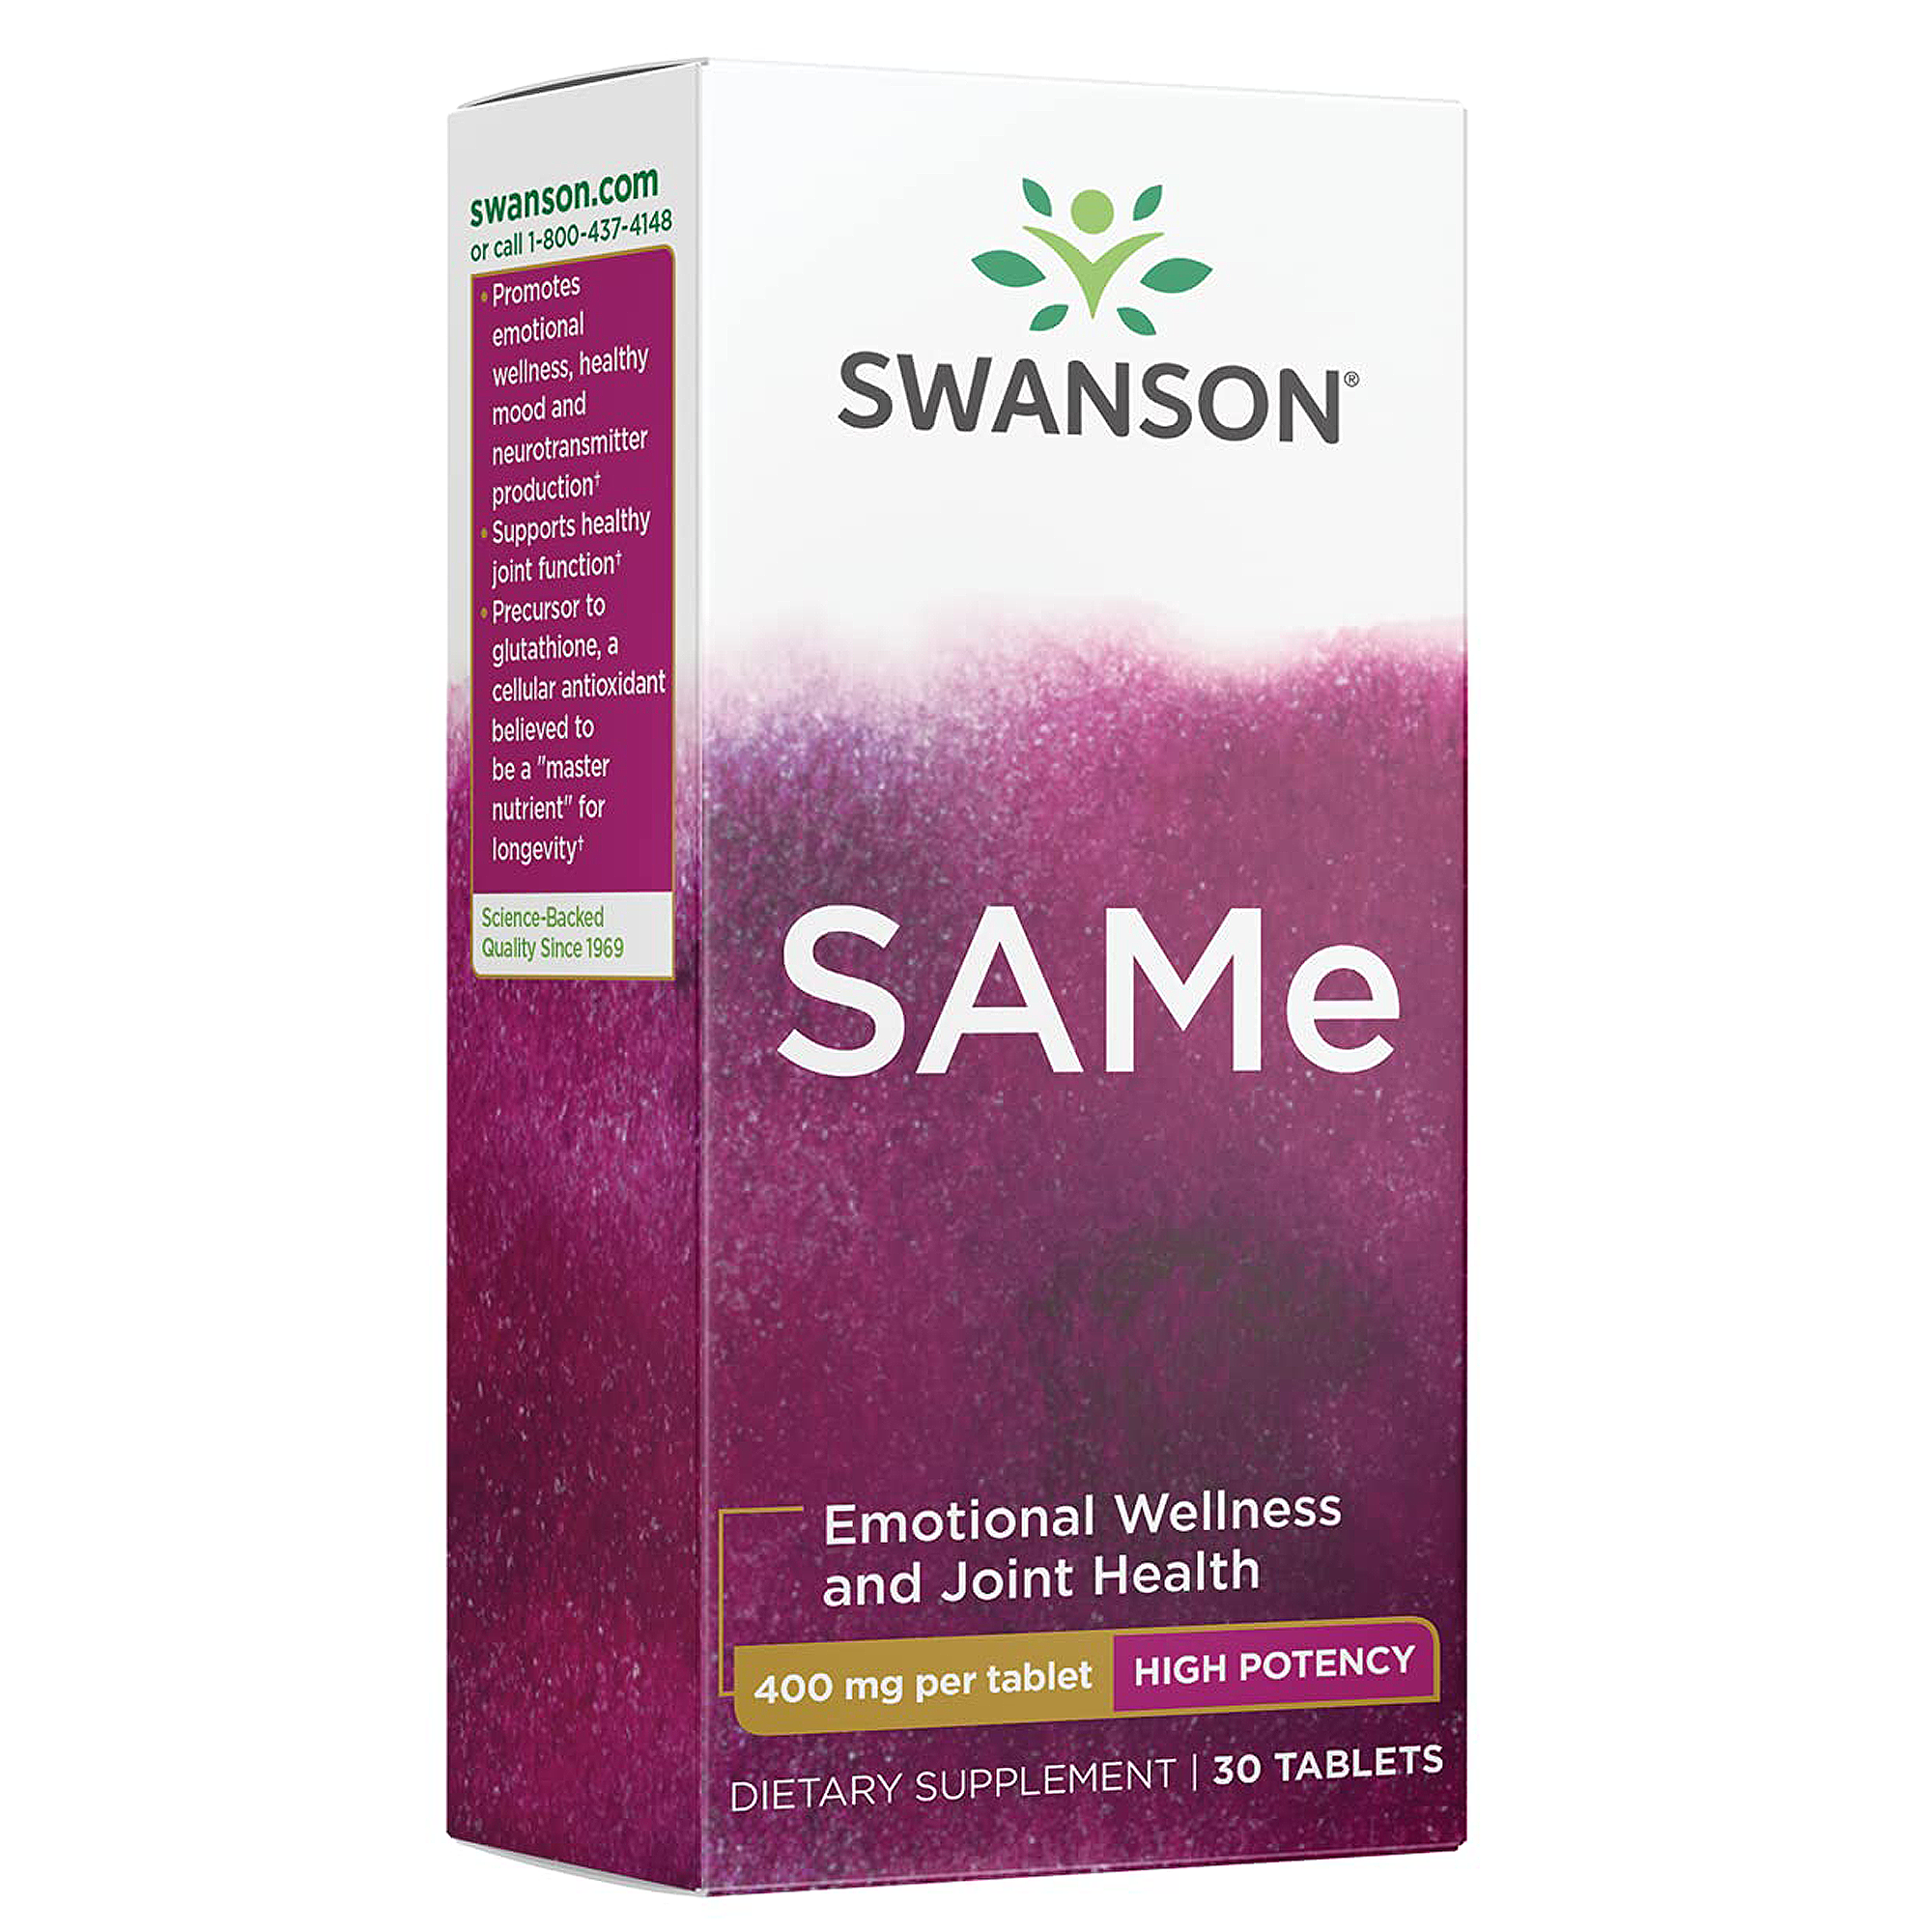 Swanson High-Potency Same, 30 Tablets, 400 mg